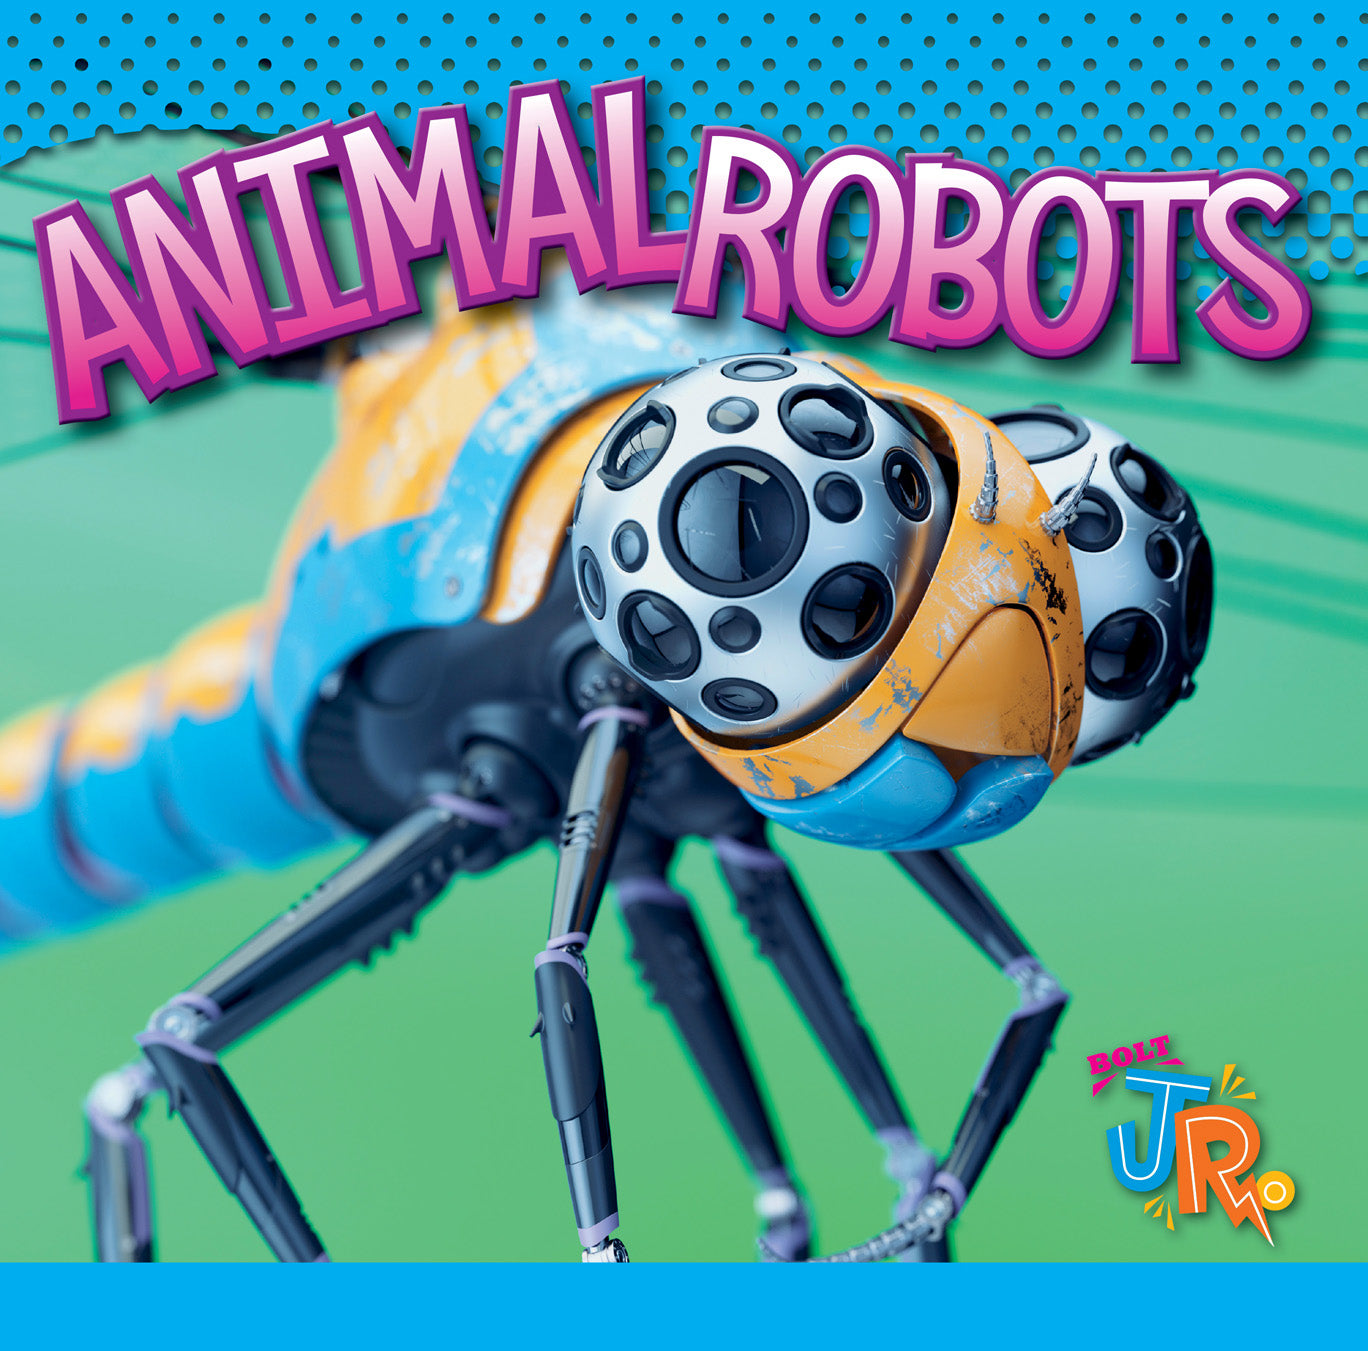 World of Robots: Animal Robots